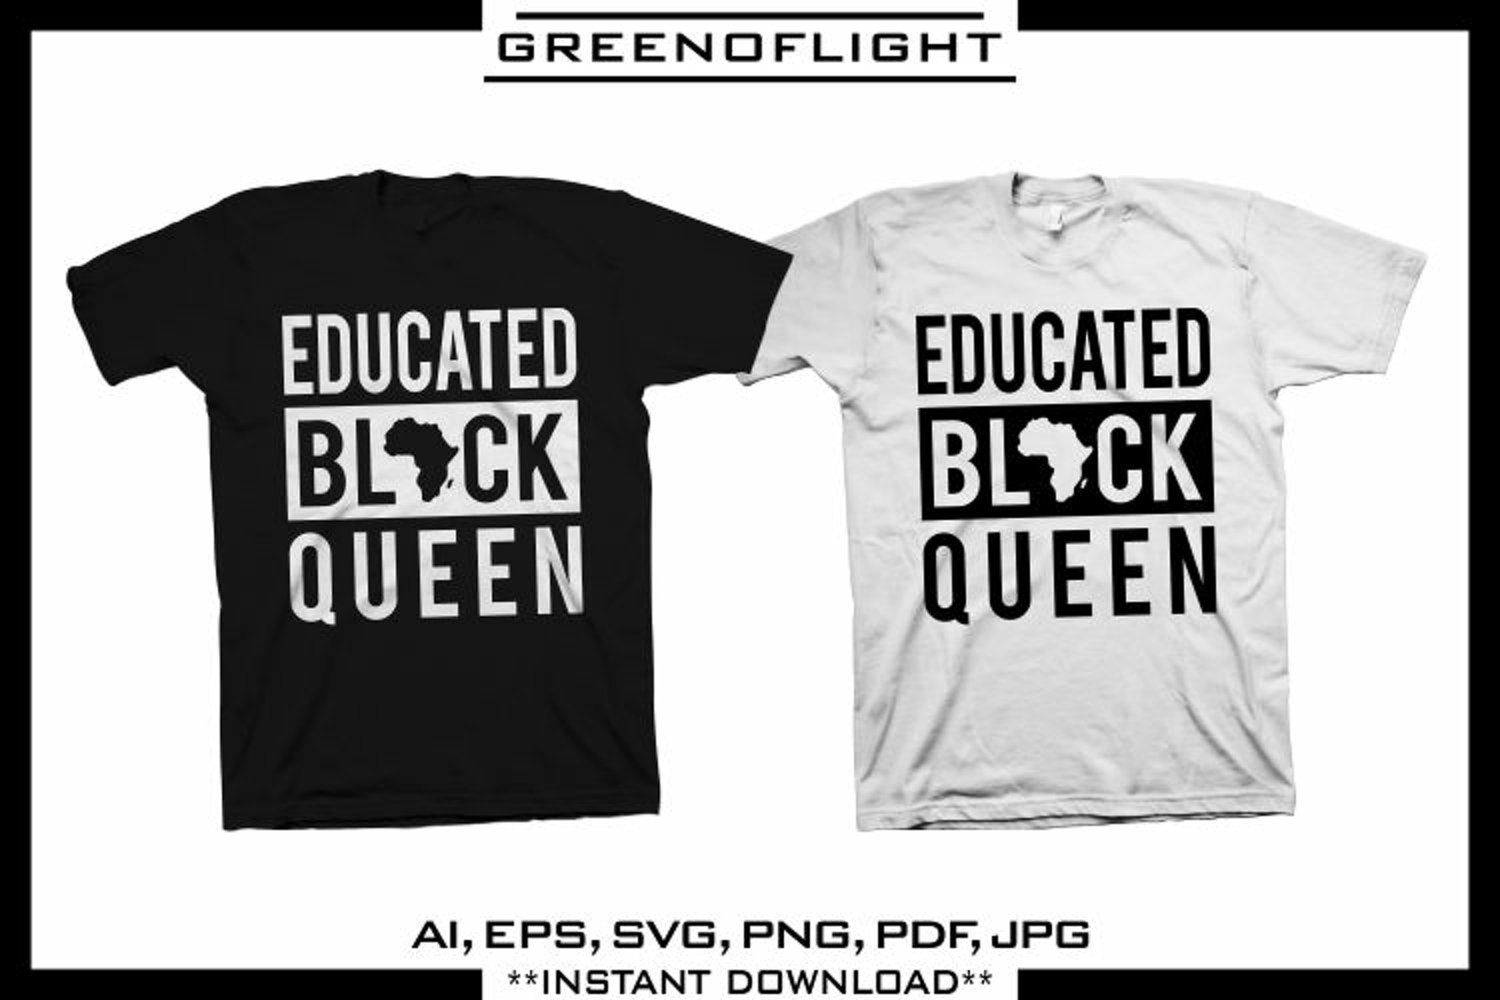 Educated black queen - b&w t-shirt design.